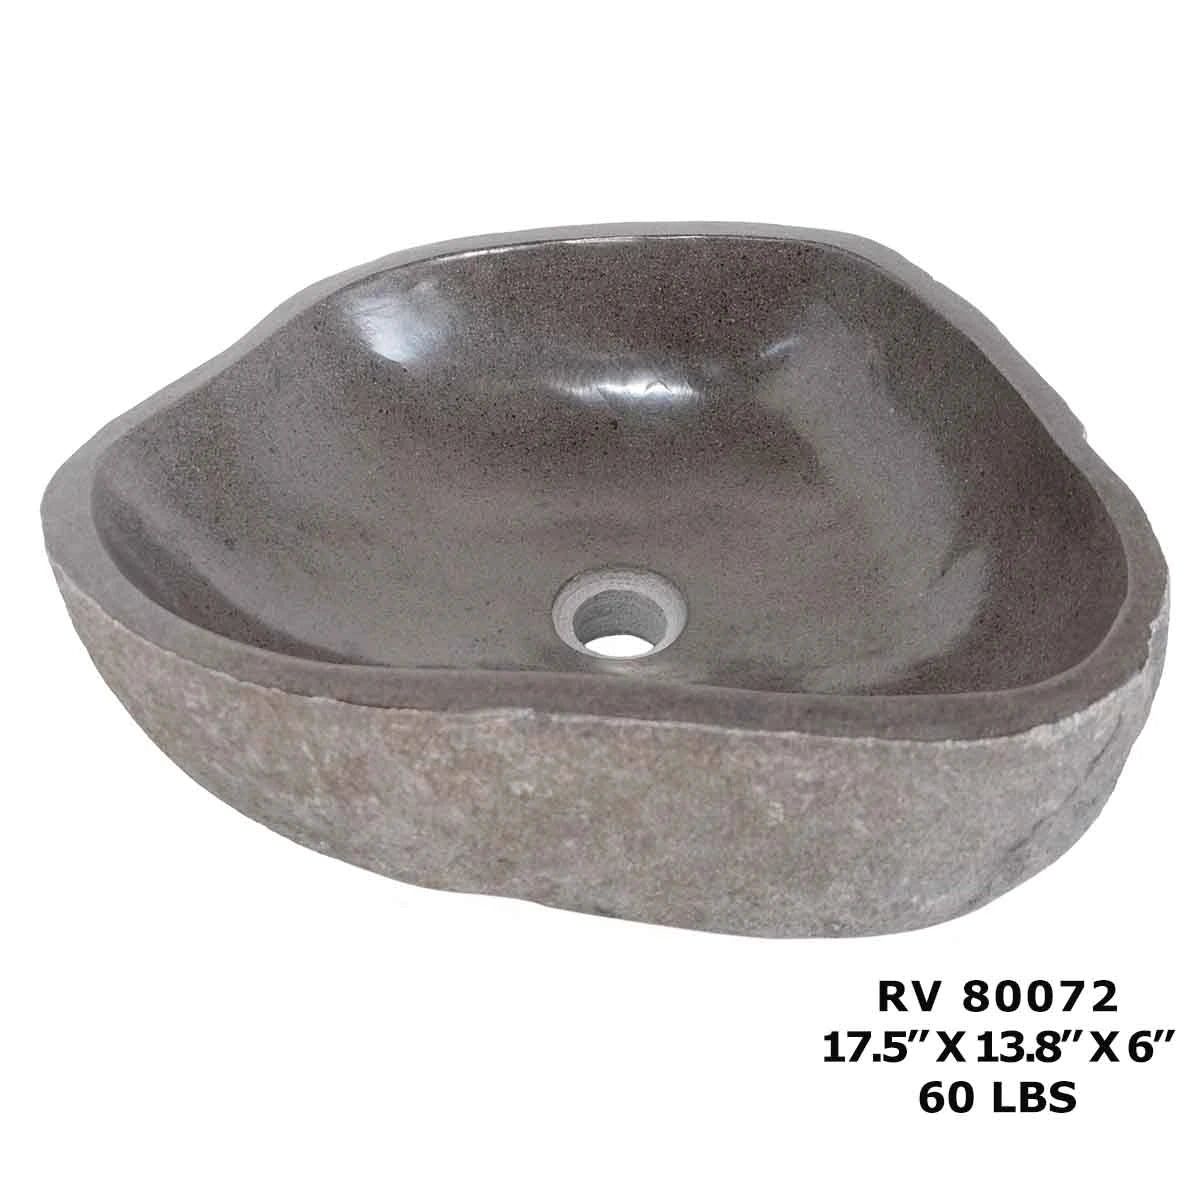 RV80072-Modern Vessel Sink - River Stone Wash Basin Sink